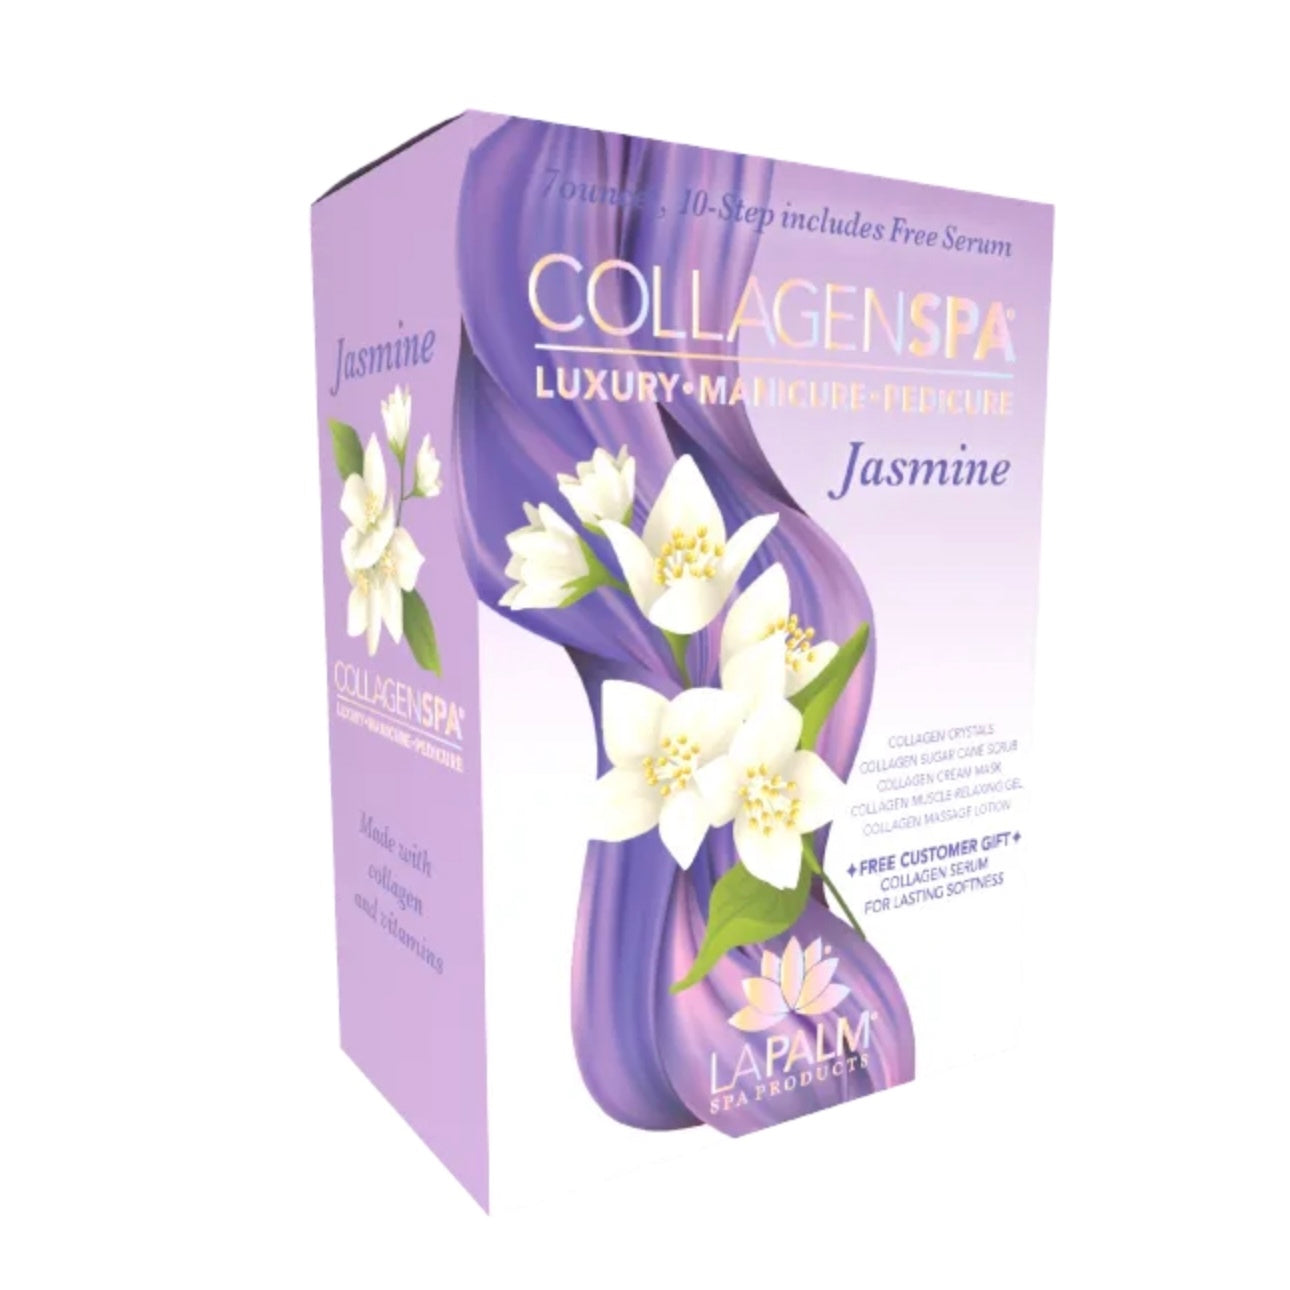 LaPalm Collagen Spa 10 Step Kit - Jasmine